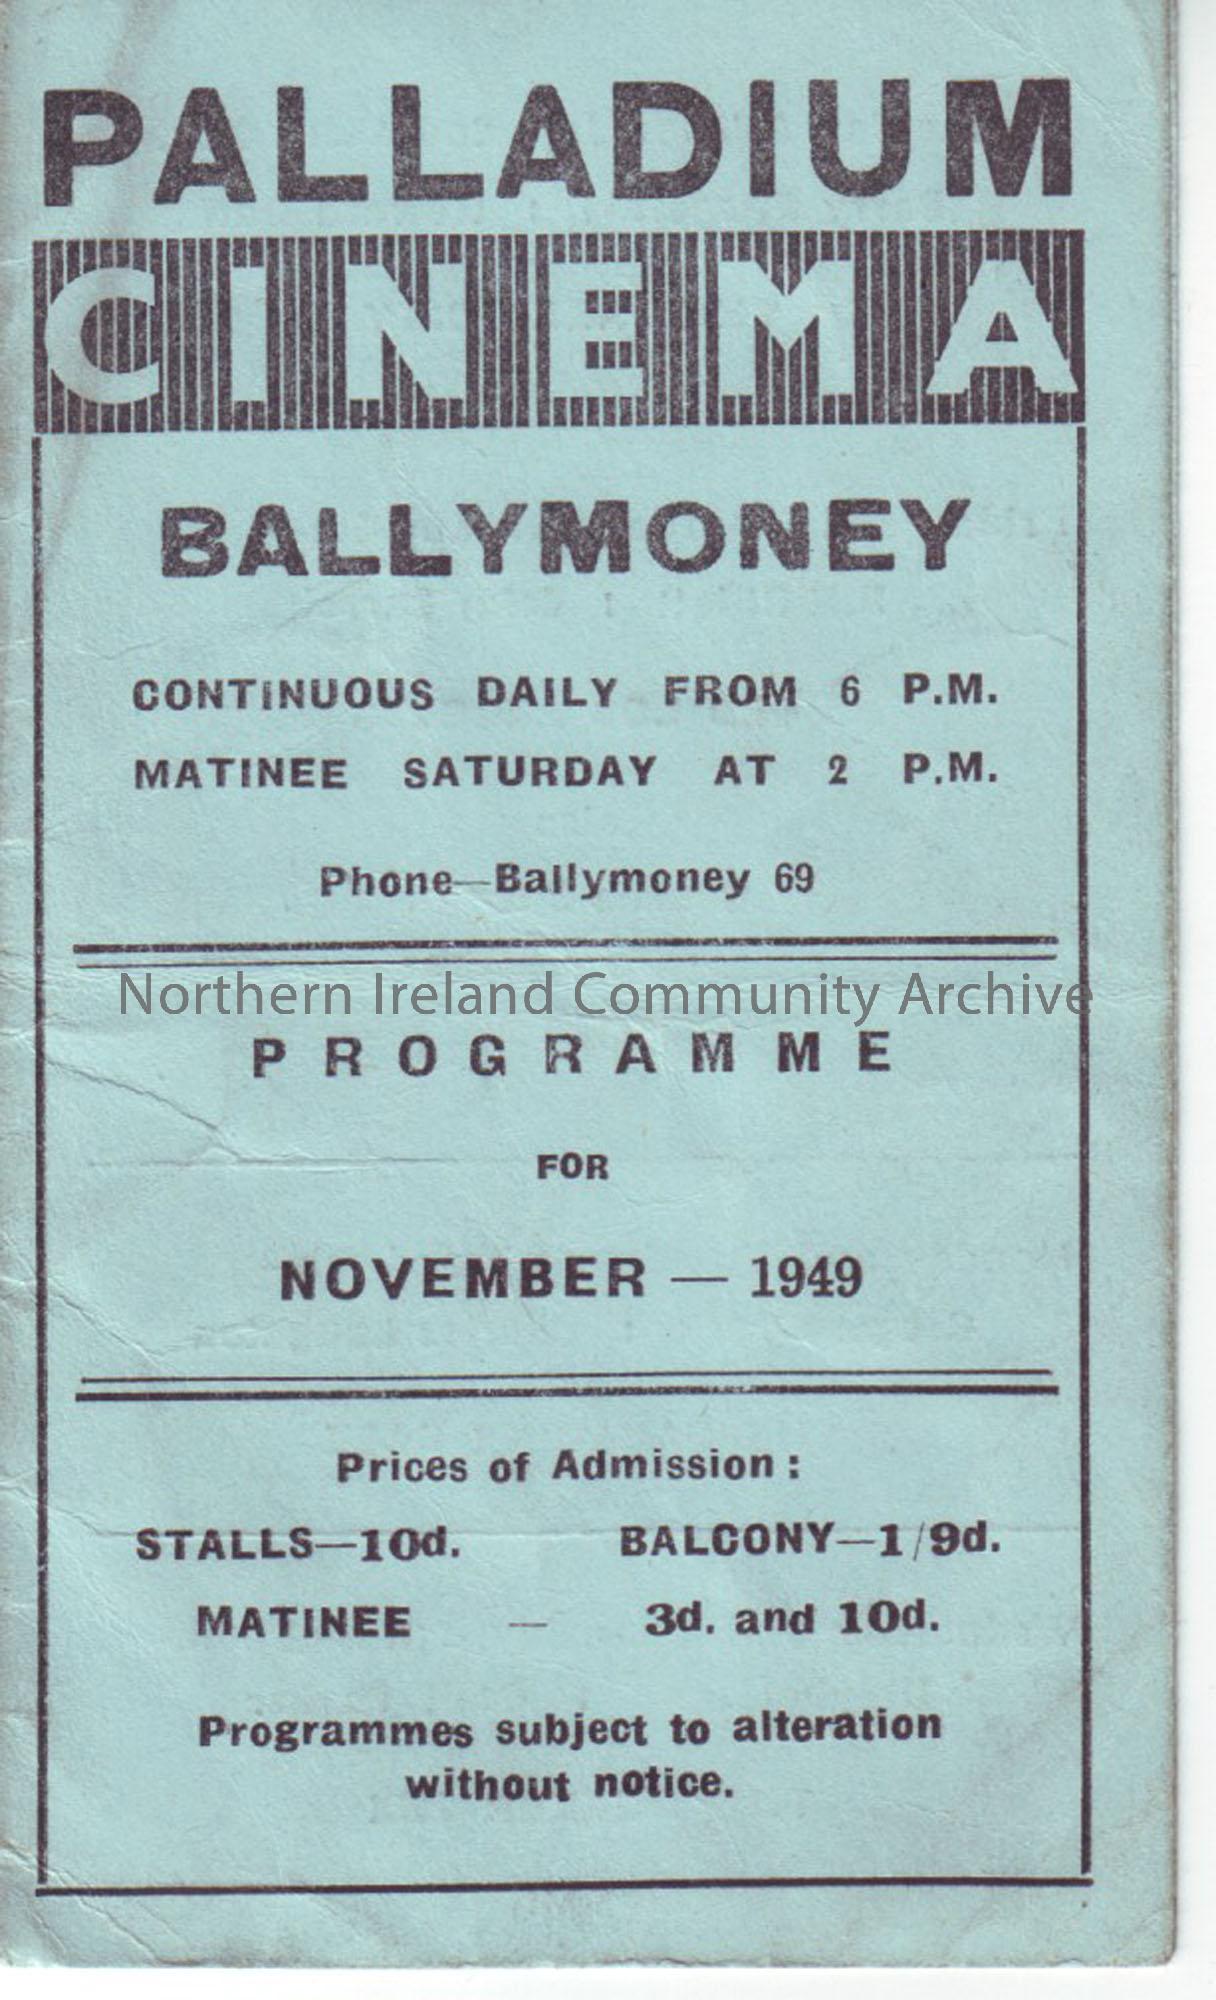 blue monthly programme for Ballymoney Palladium cinema- November 1949